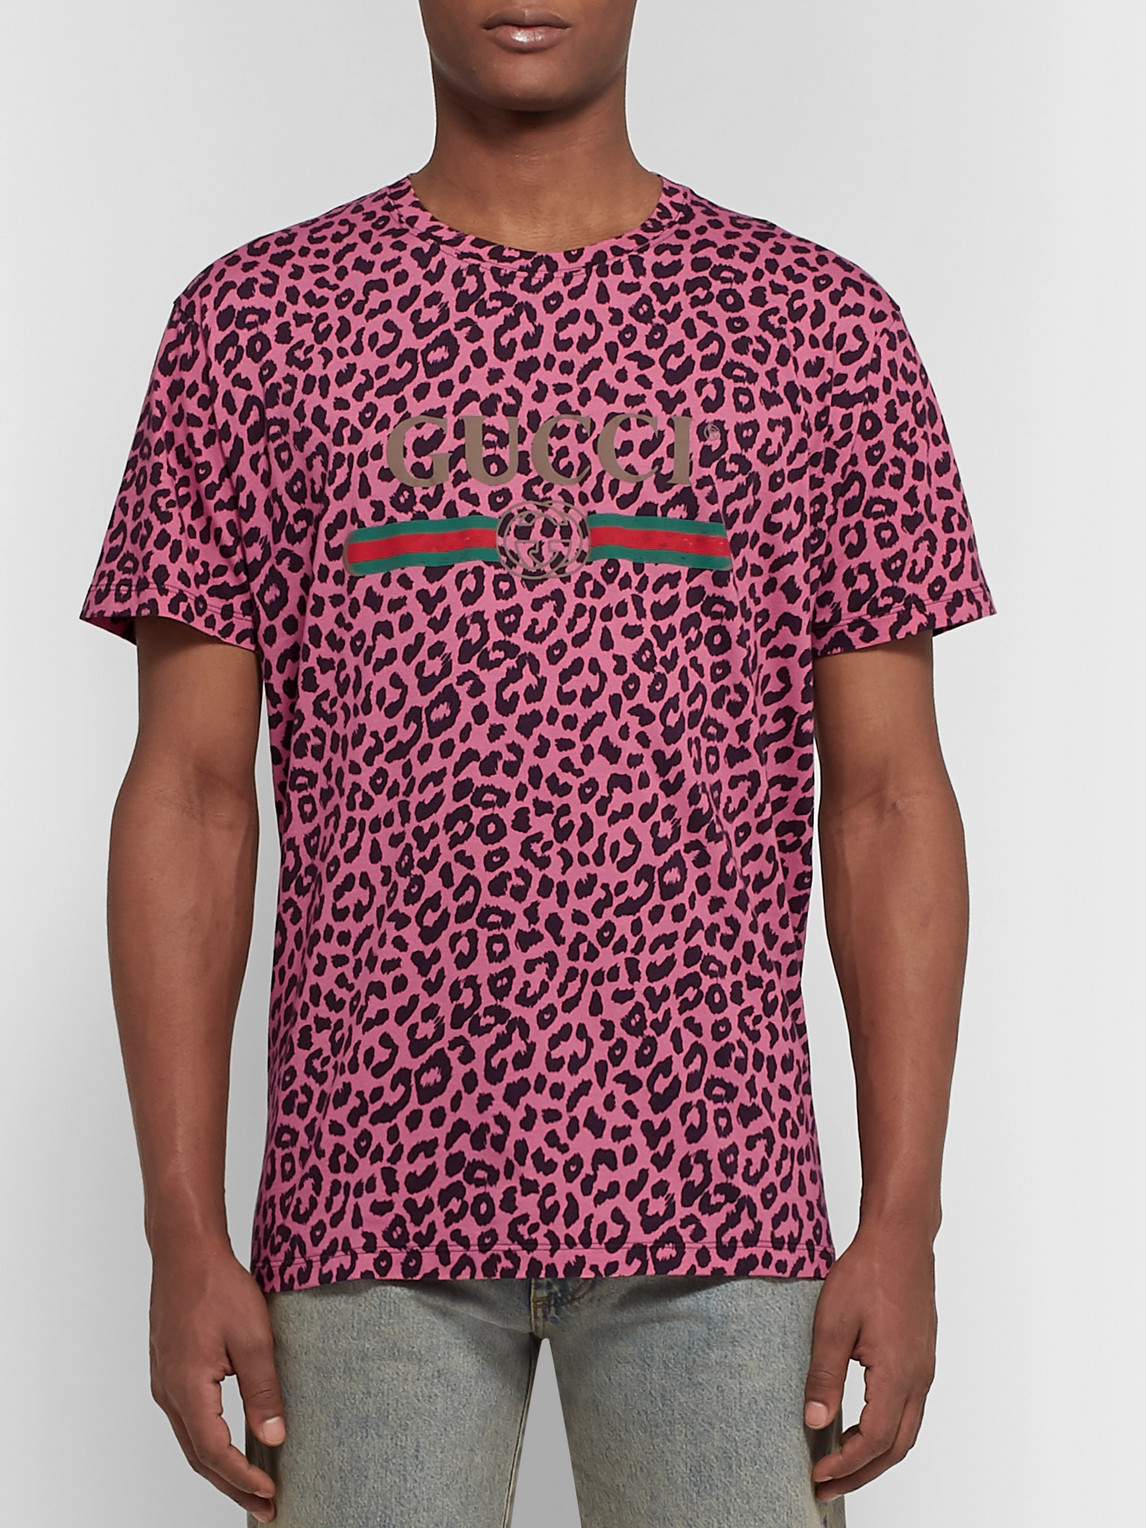 Gucci Leopard Print Shirt Flash Sales, UP TO 55% OFF | www 